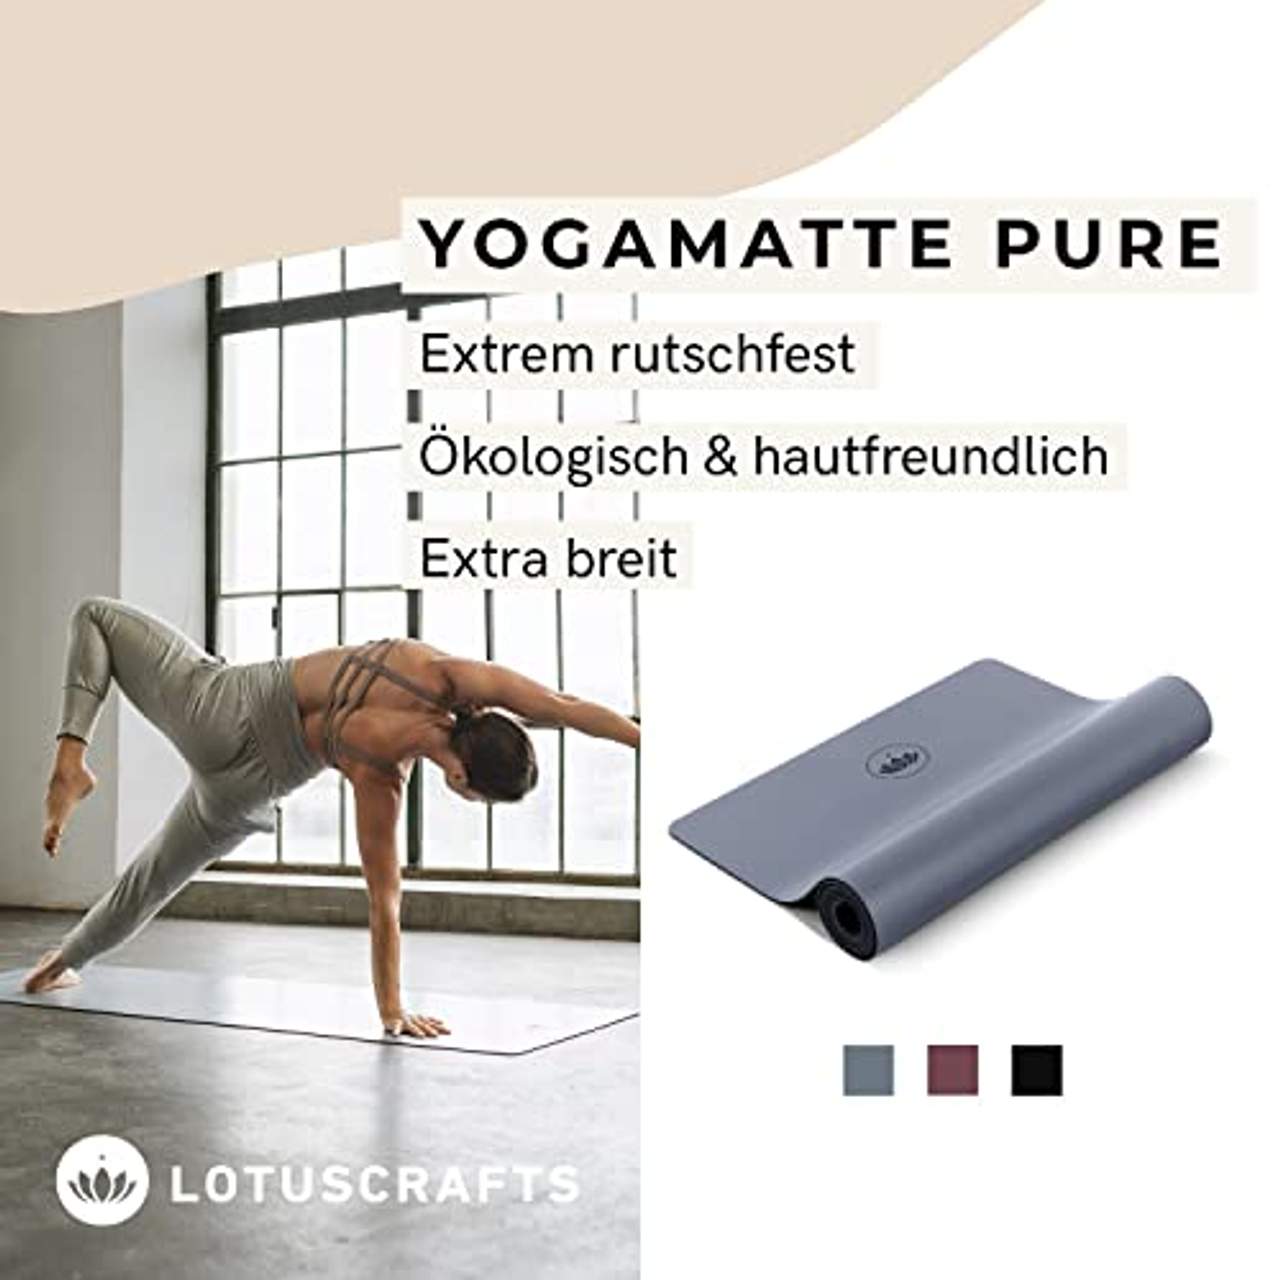 Lotuscrafts Yogamatte Pure extrem rutschfeste PU-Oberfläche